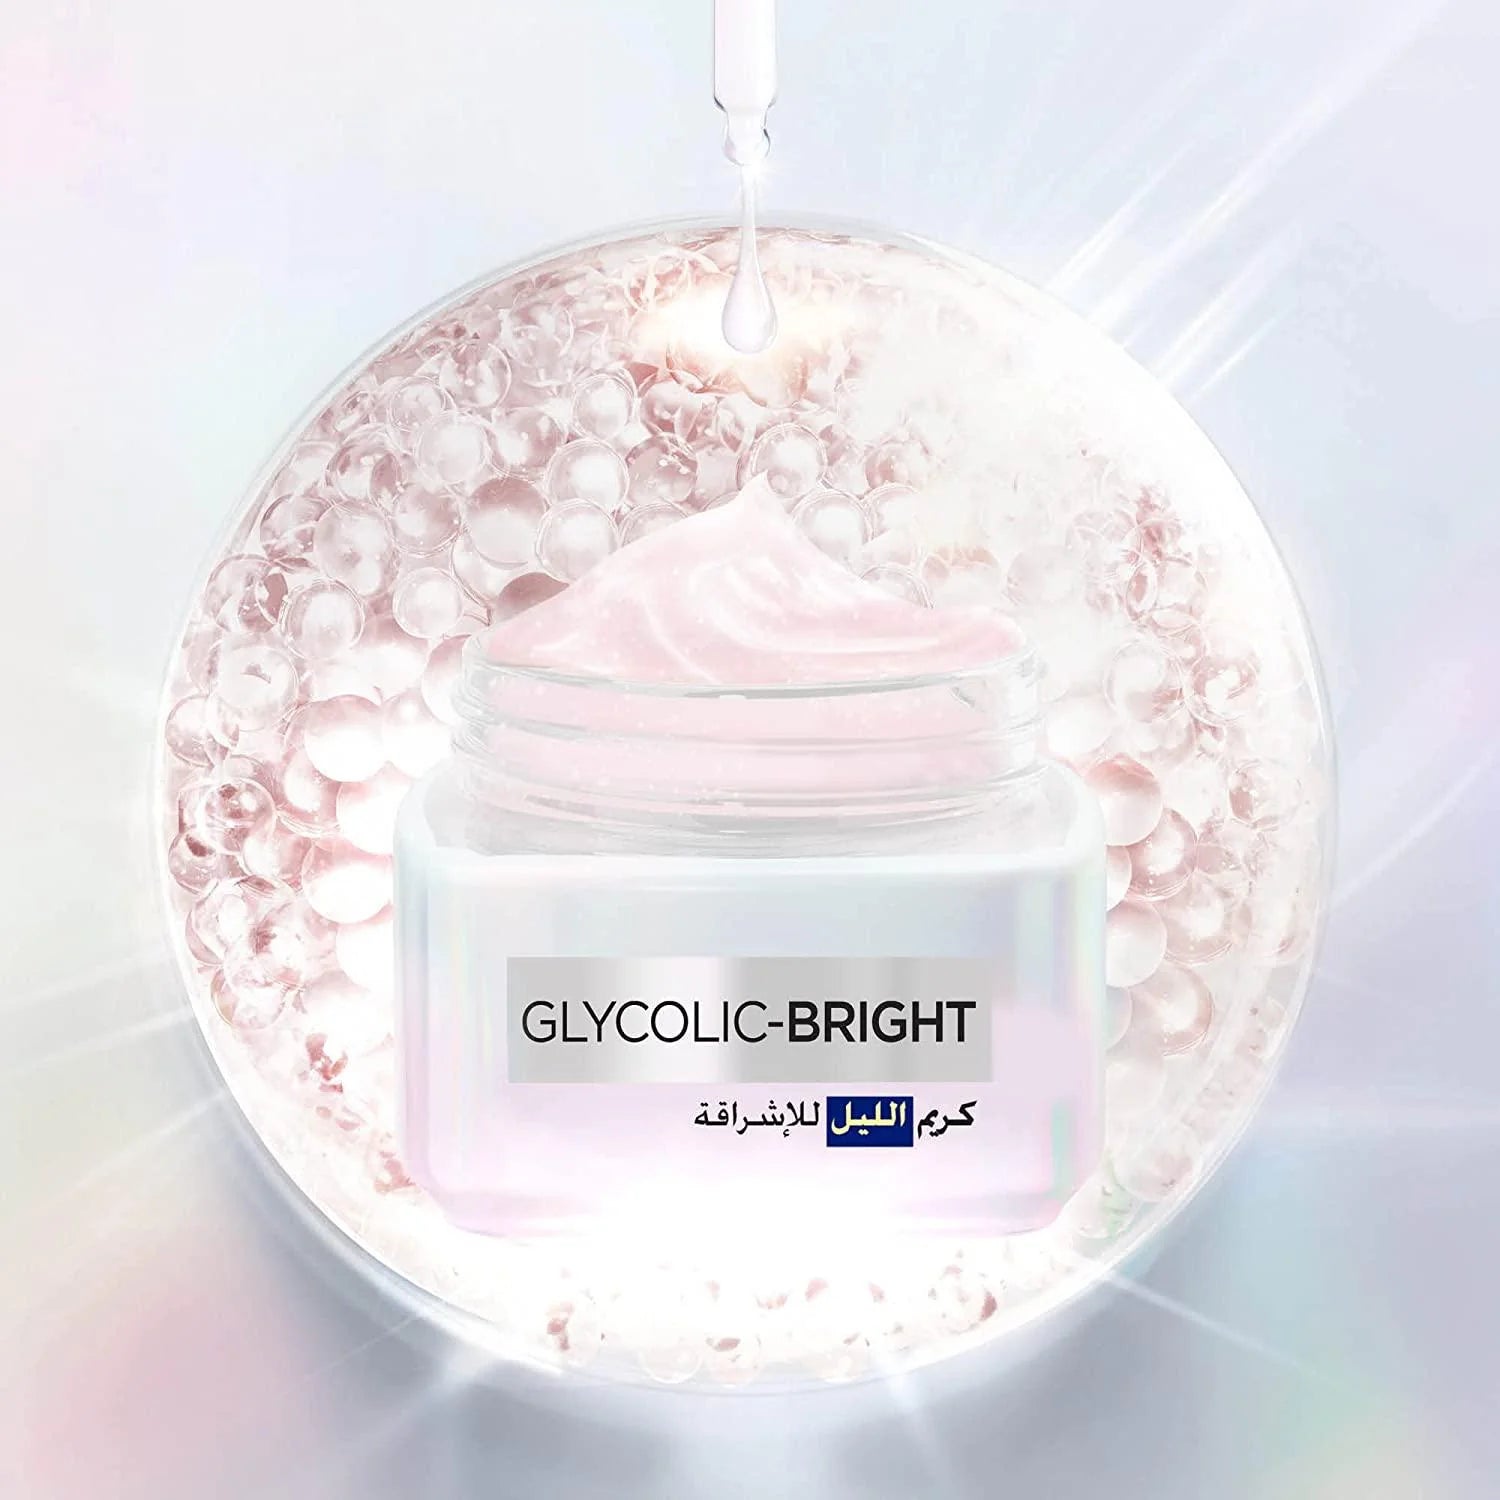 L’Oreal Paris Glycolic Bright Glowing Night Cream 50ml